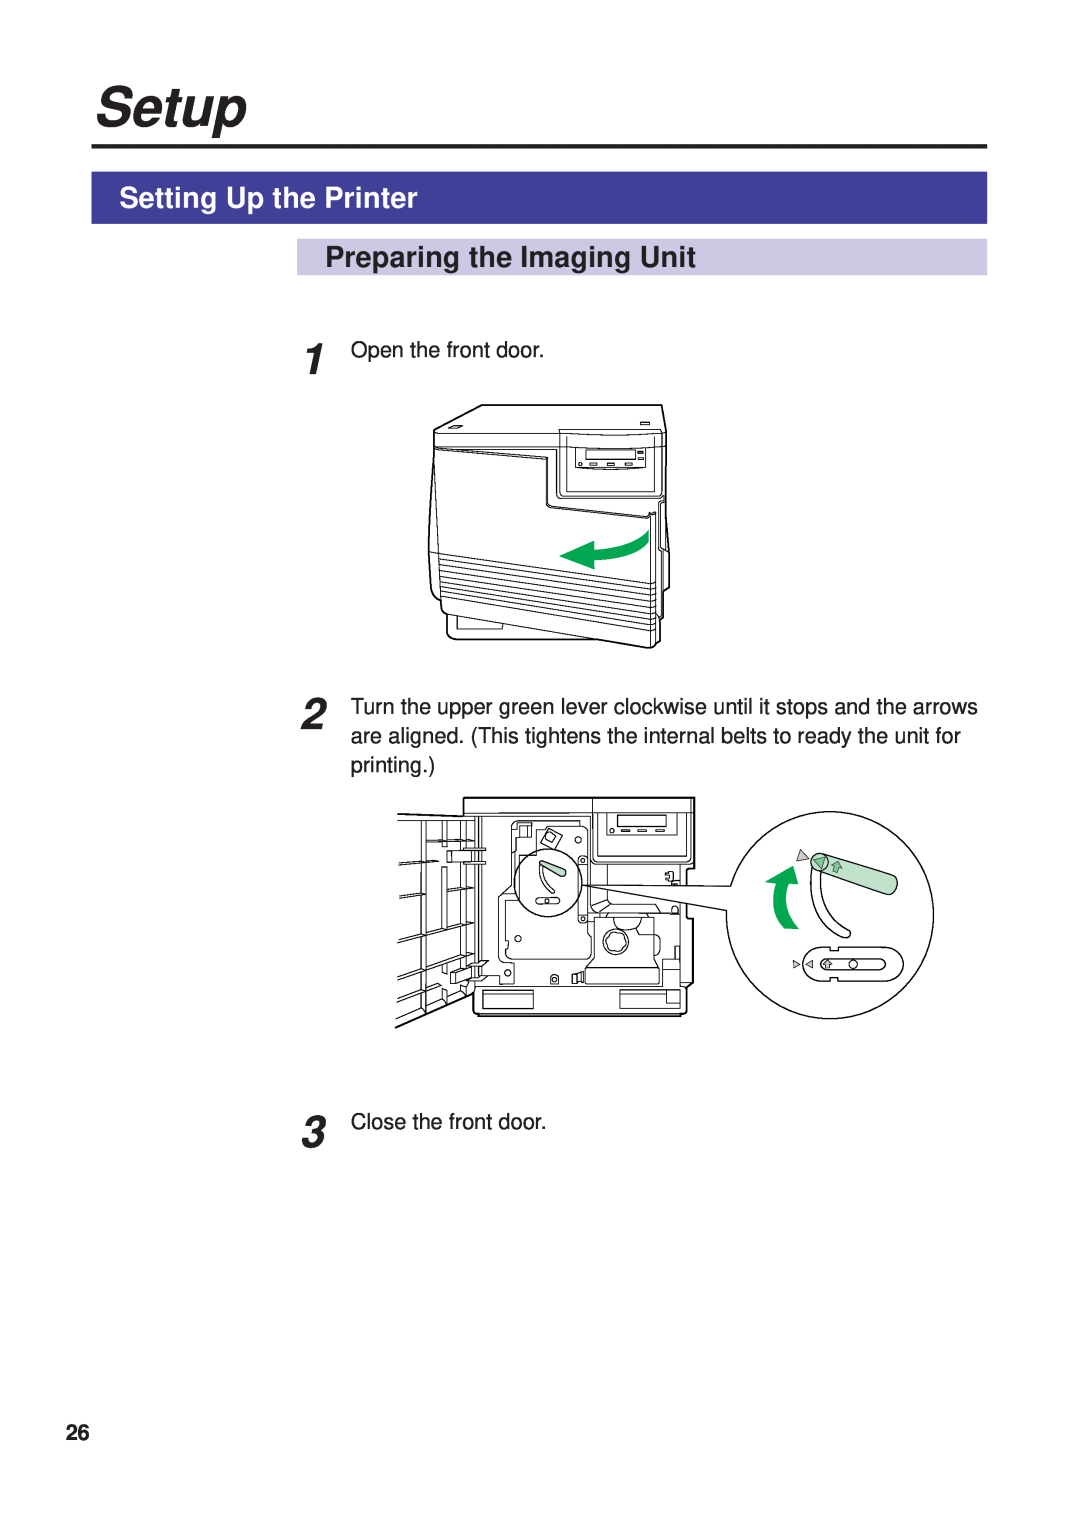 Panasonic KX-PS8000 manual Setup, Setting Up the Printer, Preparing the Imaging Unit, Open the front door 